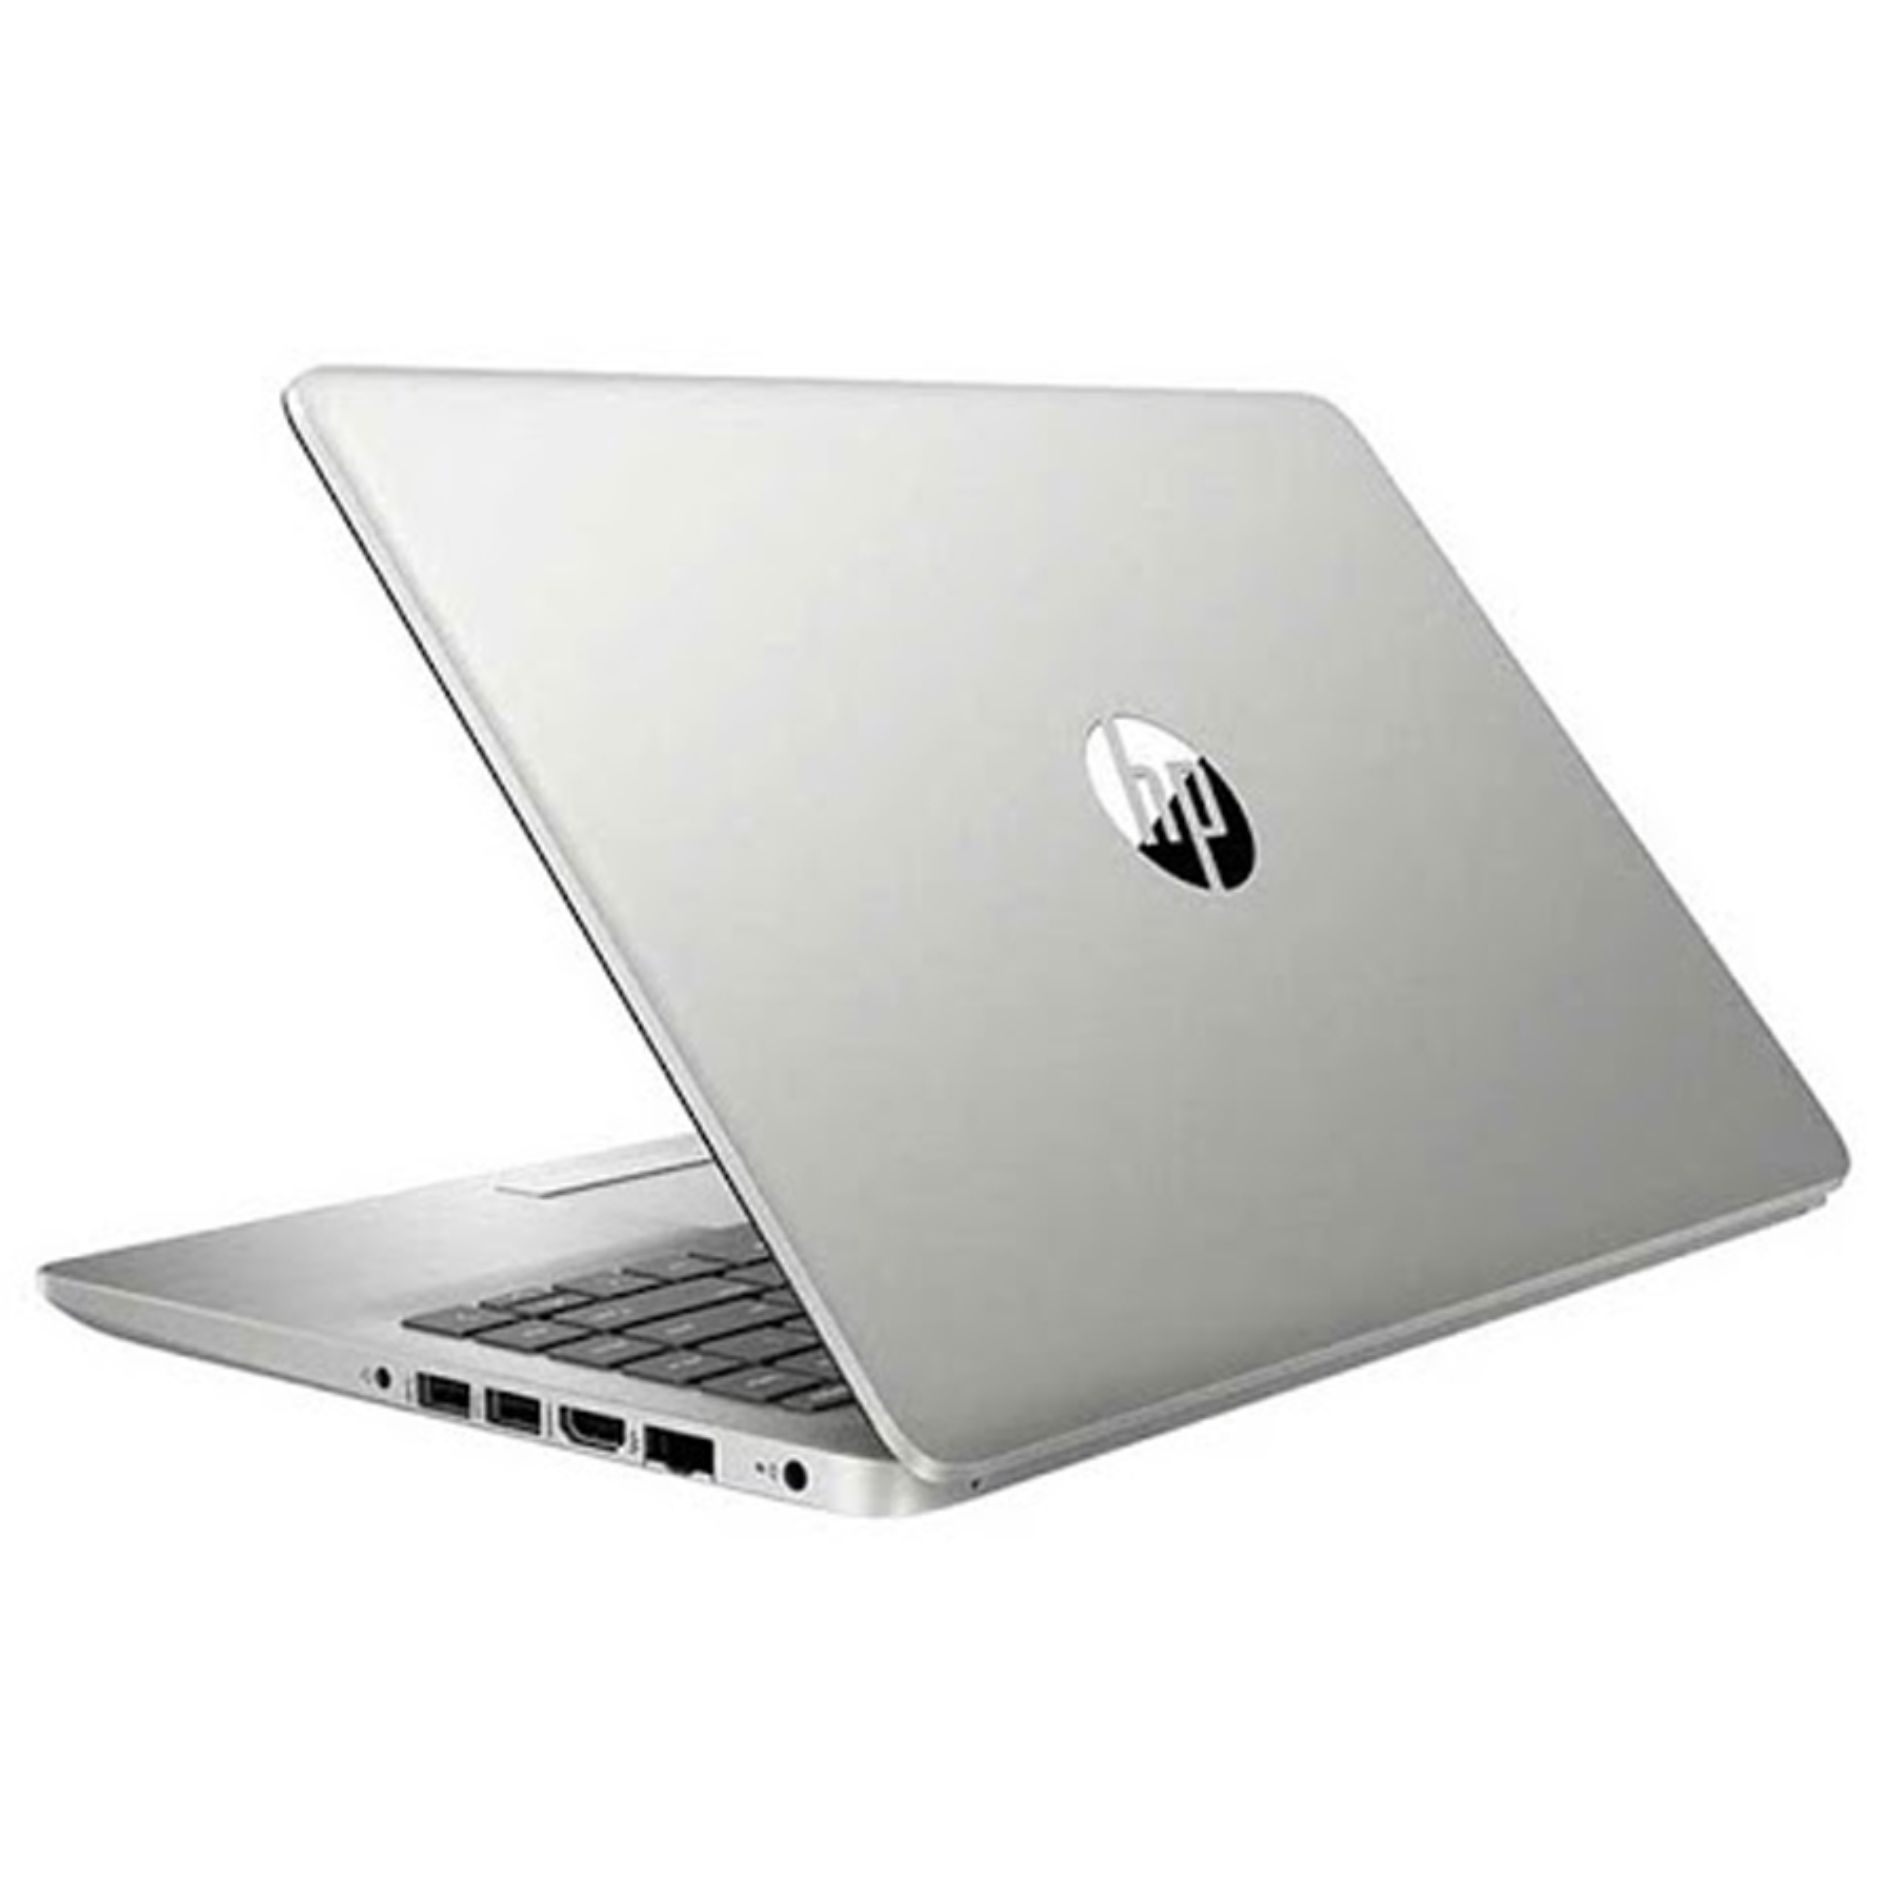 Laptop core i5/4gb/256gb 3